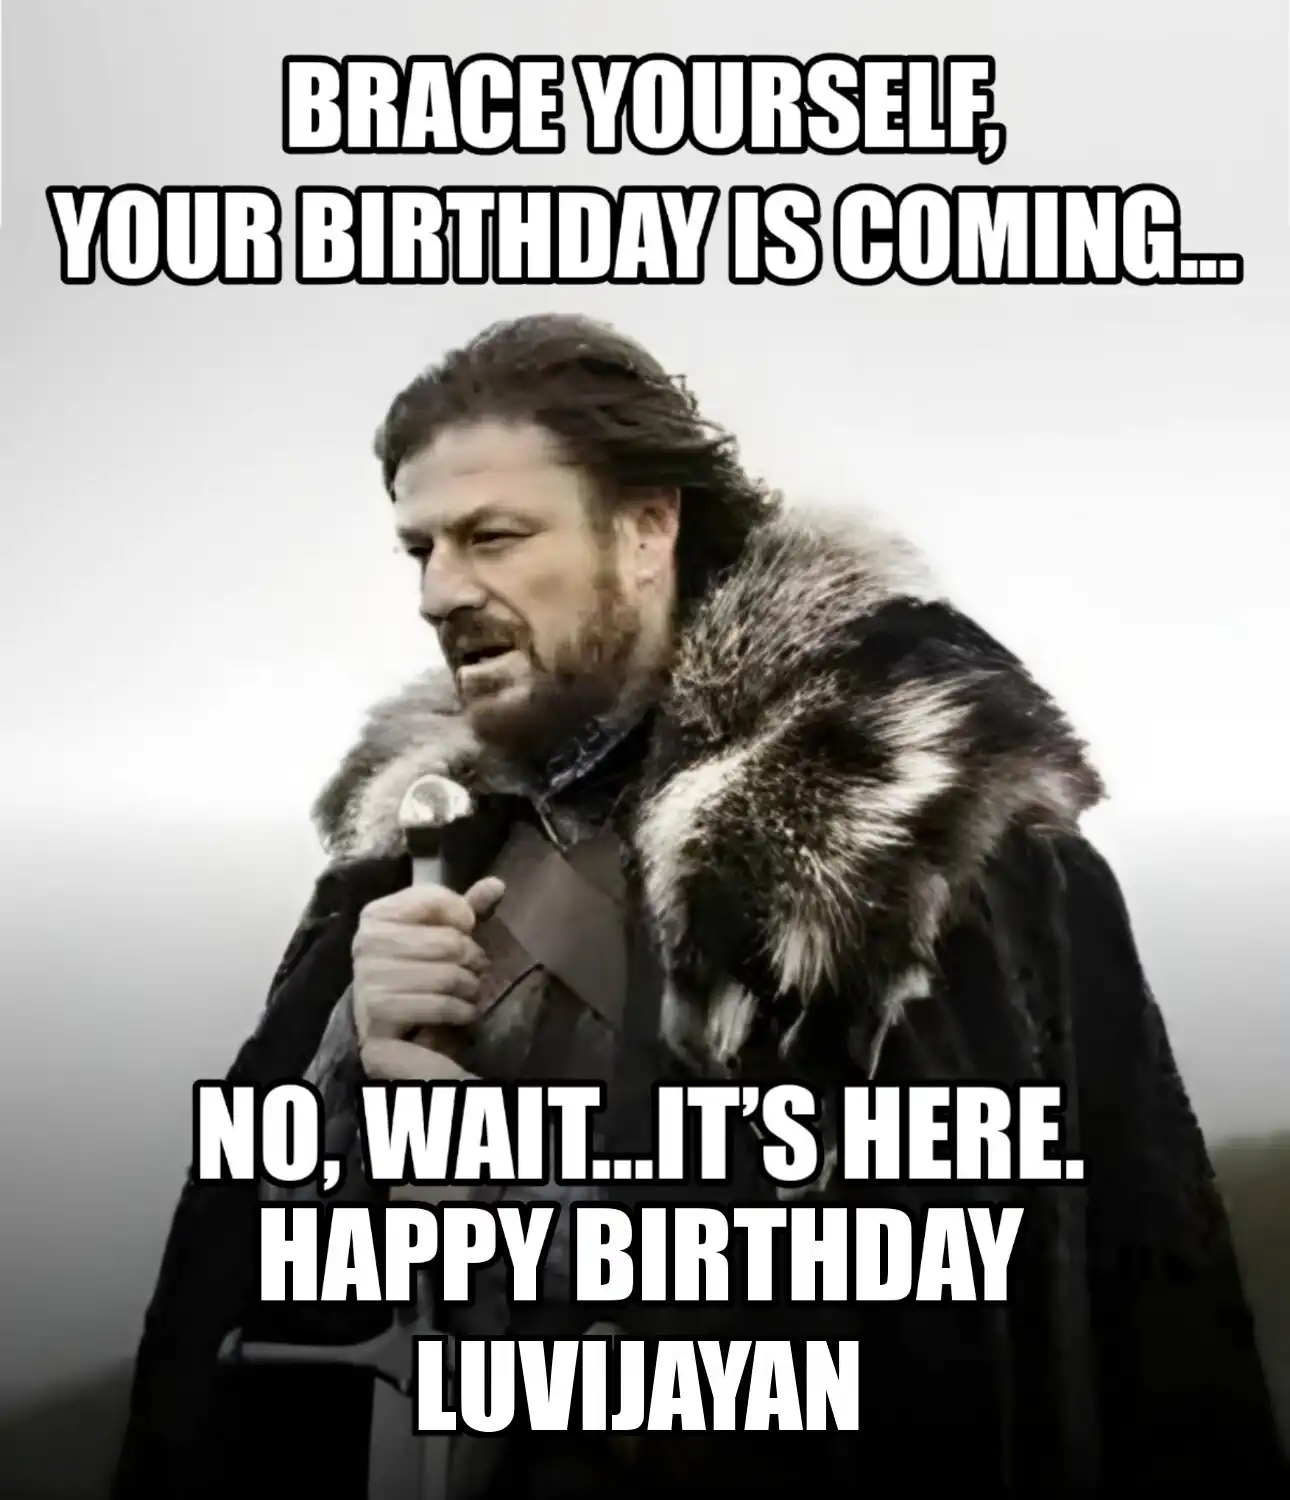 Happy Birthday Luvijayan Brace Yourself Your Birthday Is Coming Meme